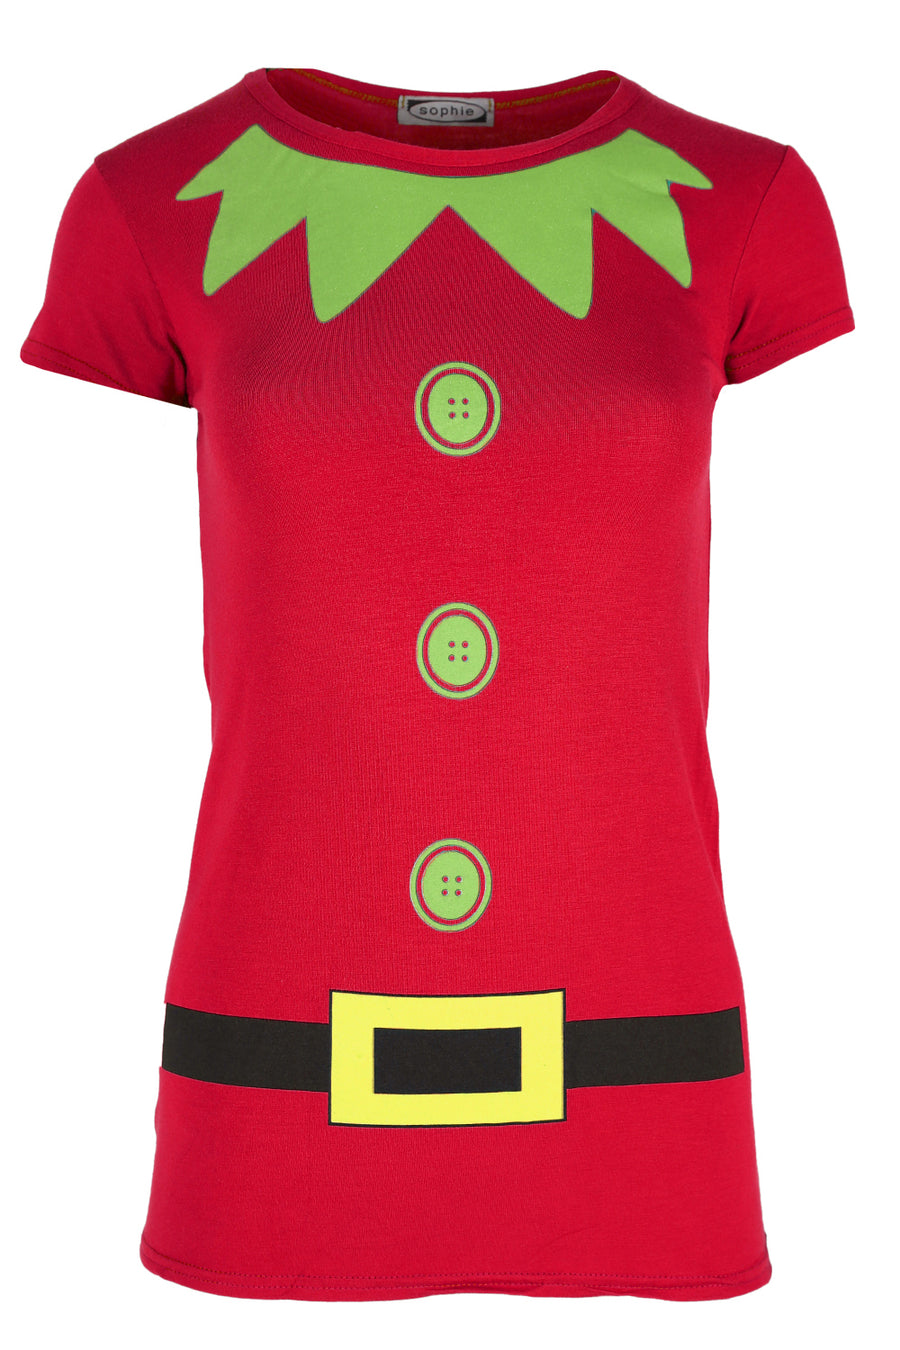 Christmas Elf Costume Short Sleeve Tshirt - bejealous-com